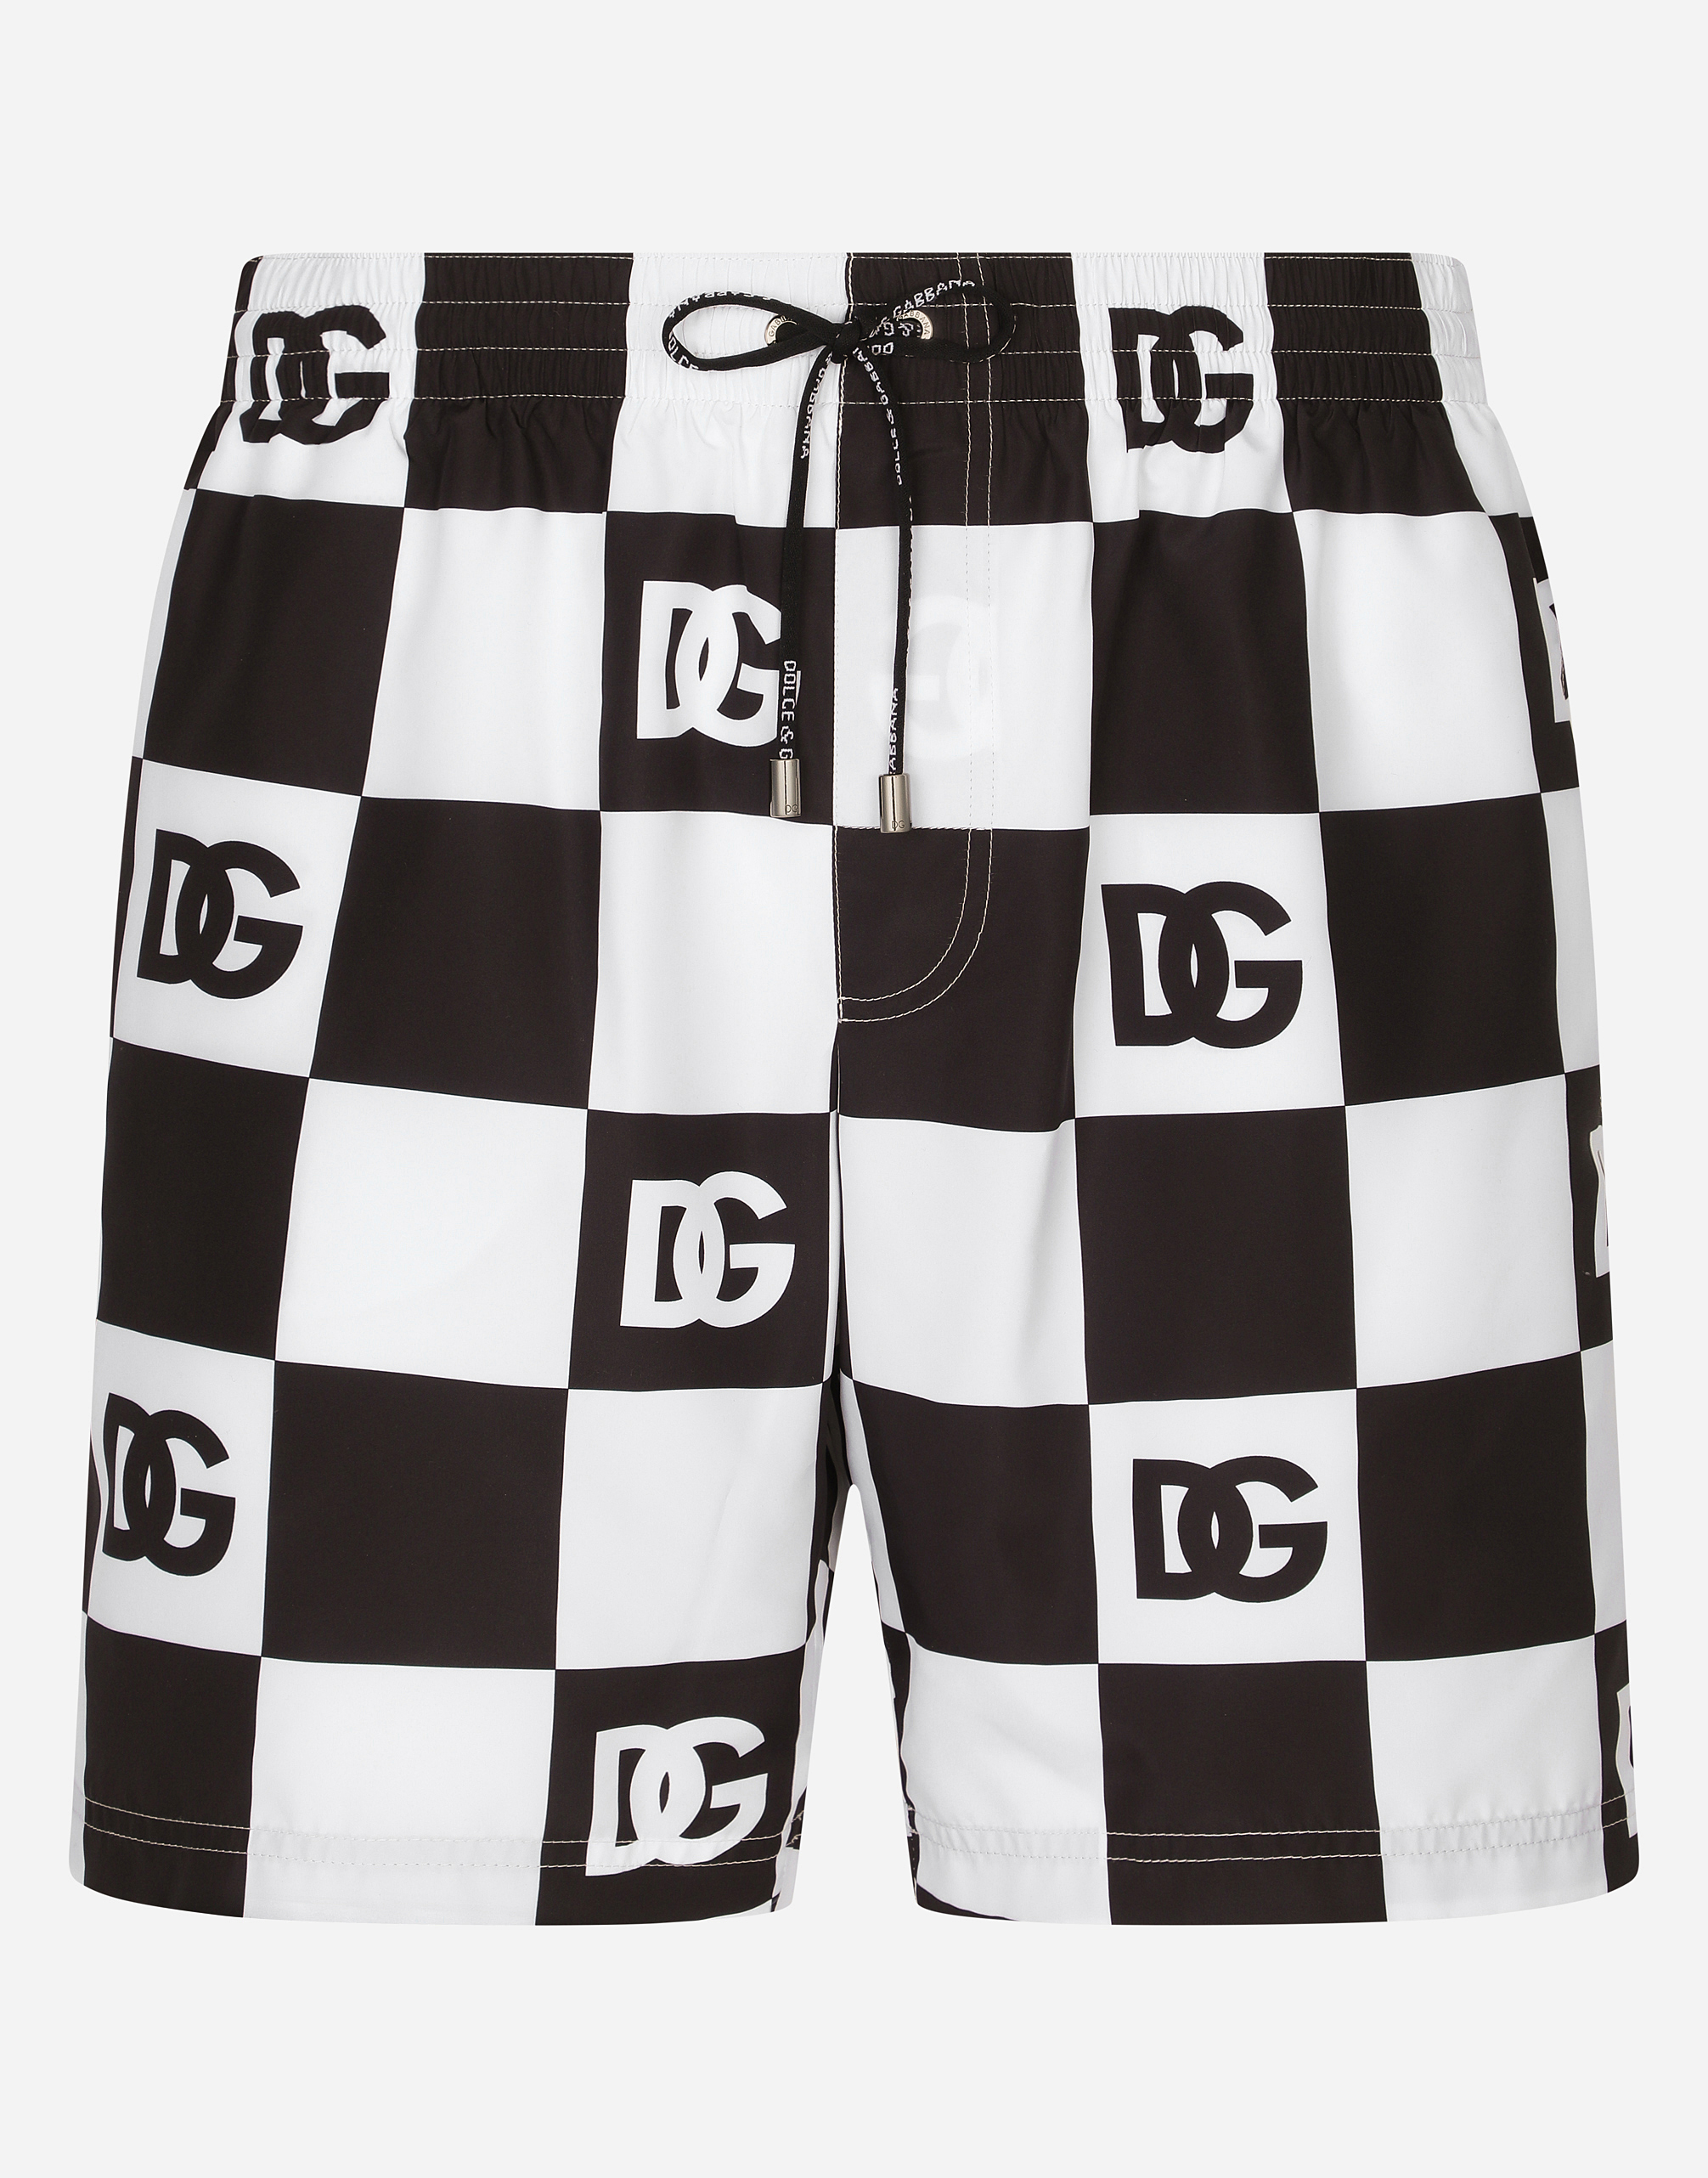 Damier-print mid-length swim trunks with DG logo in Multicolor